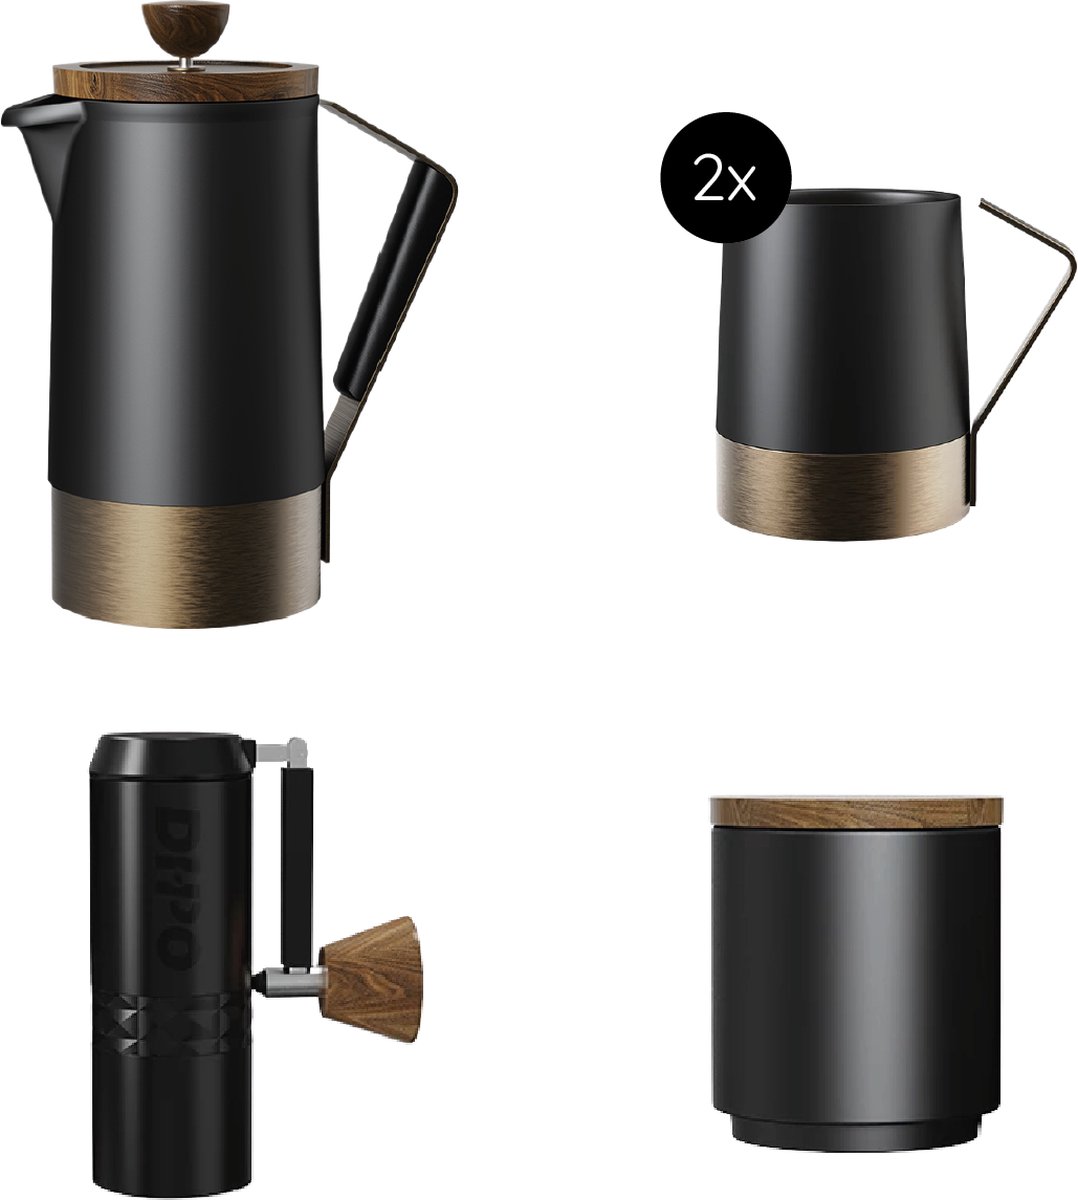 DHPO Koffie Set Duke XL - Zwart - H20 x Ø10 - Hooggebakken Keramiek - RVS - Dubbelwandig - Druppelloze tuit - Verse Koffiemaker - Cafetiere - Percolator - Zet 3 kopjes verse koffie - Cadeauset - Inclusief Reiskoffer